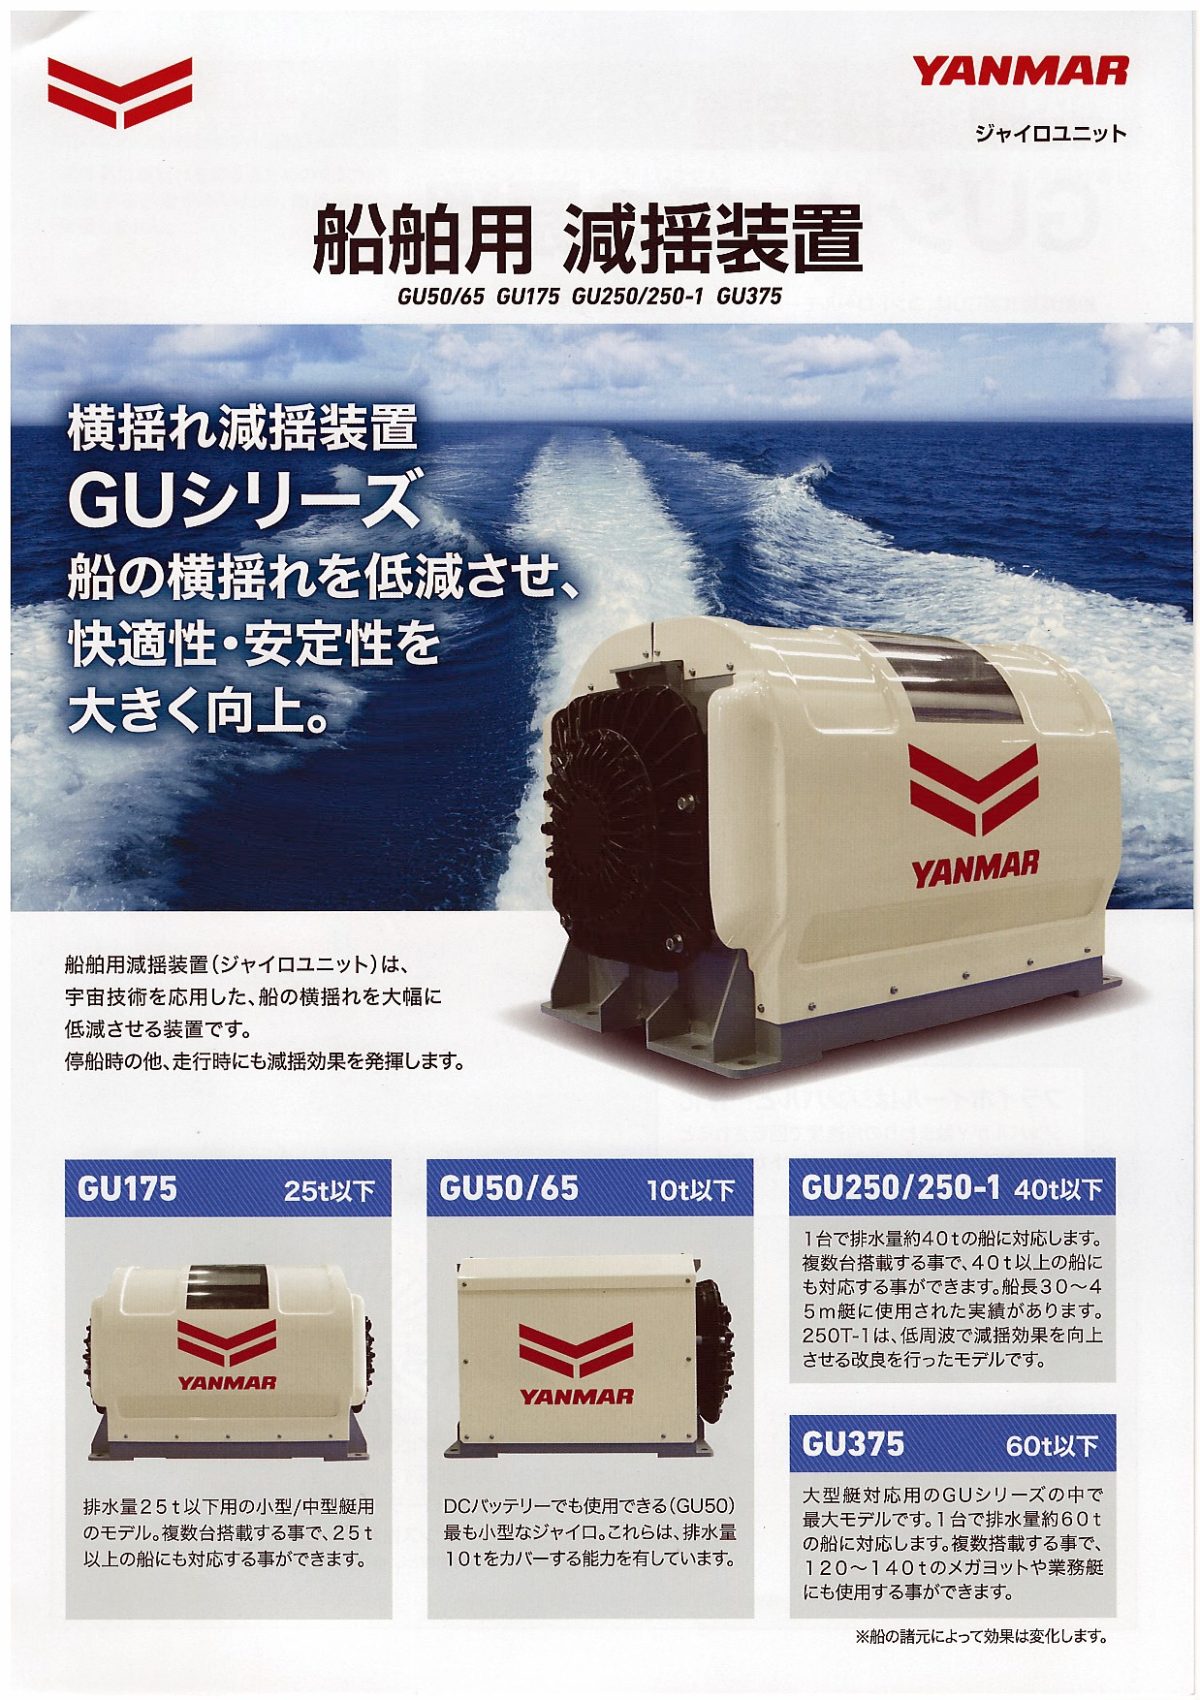 船舶用 減揺装置 ジャイロユニット GU50/60・GU175・GU250/250-1・GU375（当社技術提供）